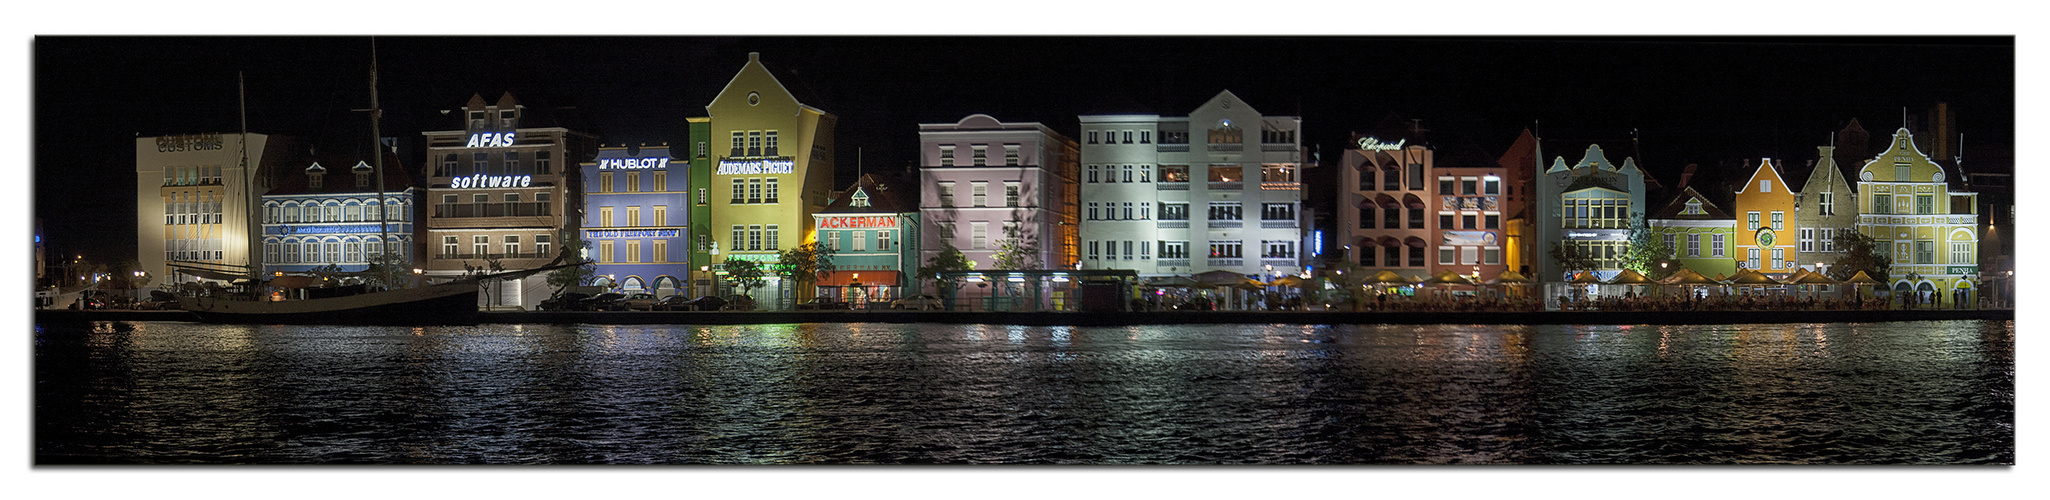 Willemstad by Night